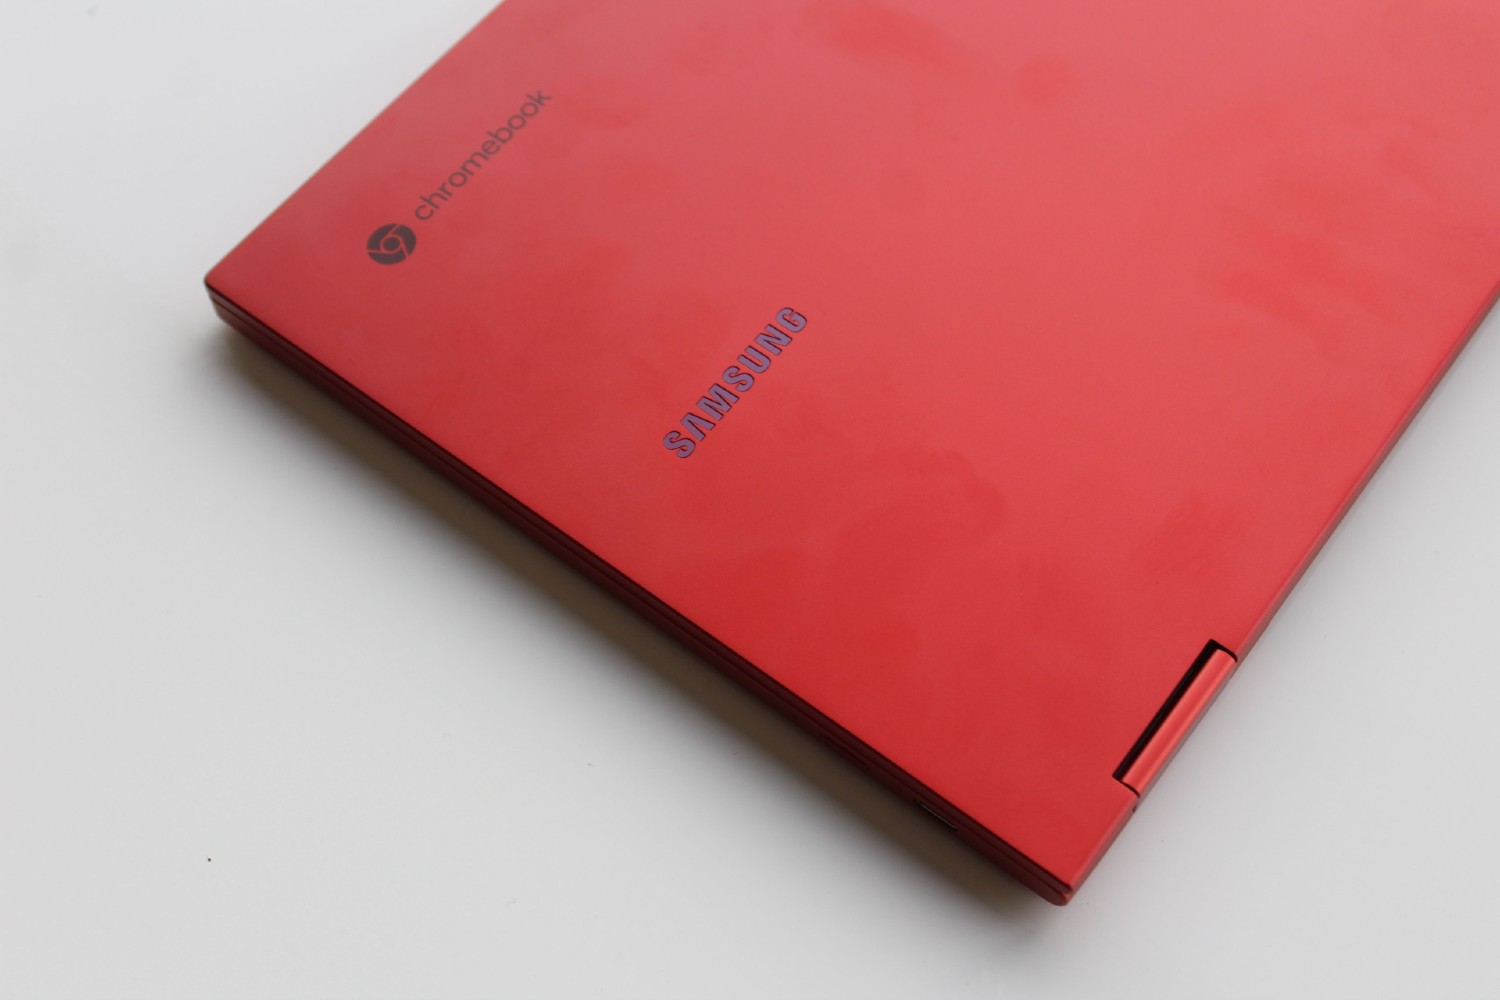 Samsung Galaxy Chromebook 2, i3-10110U -  External Reviews